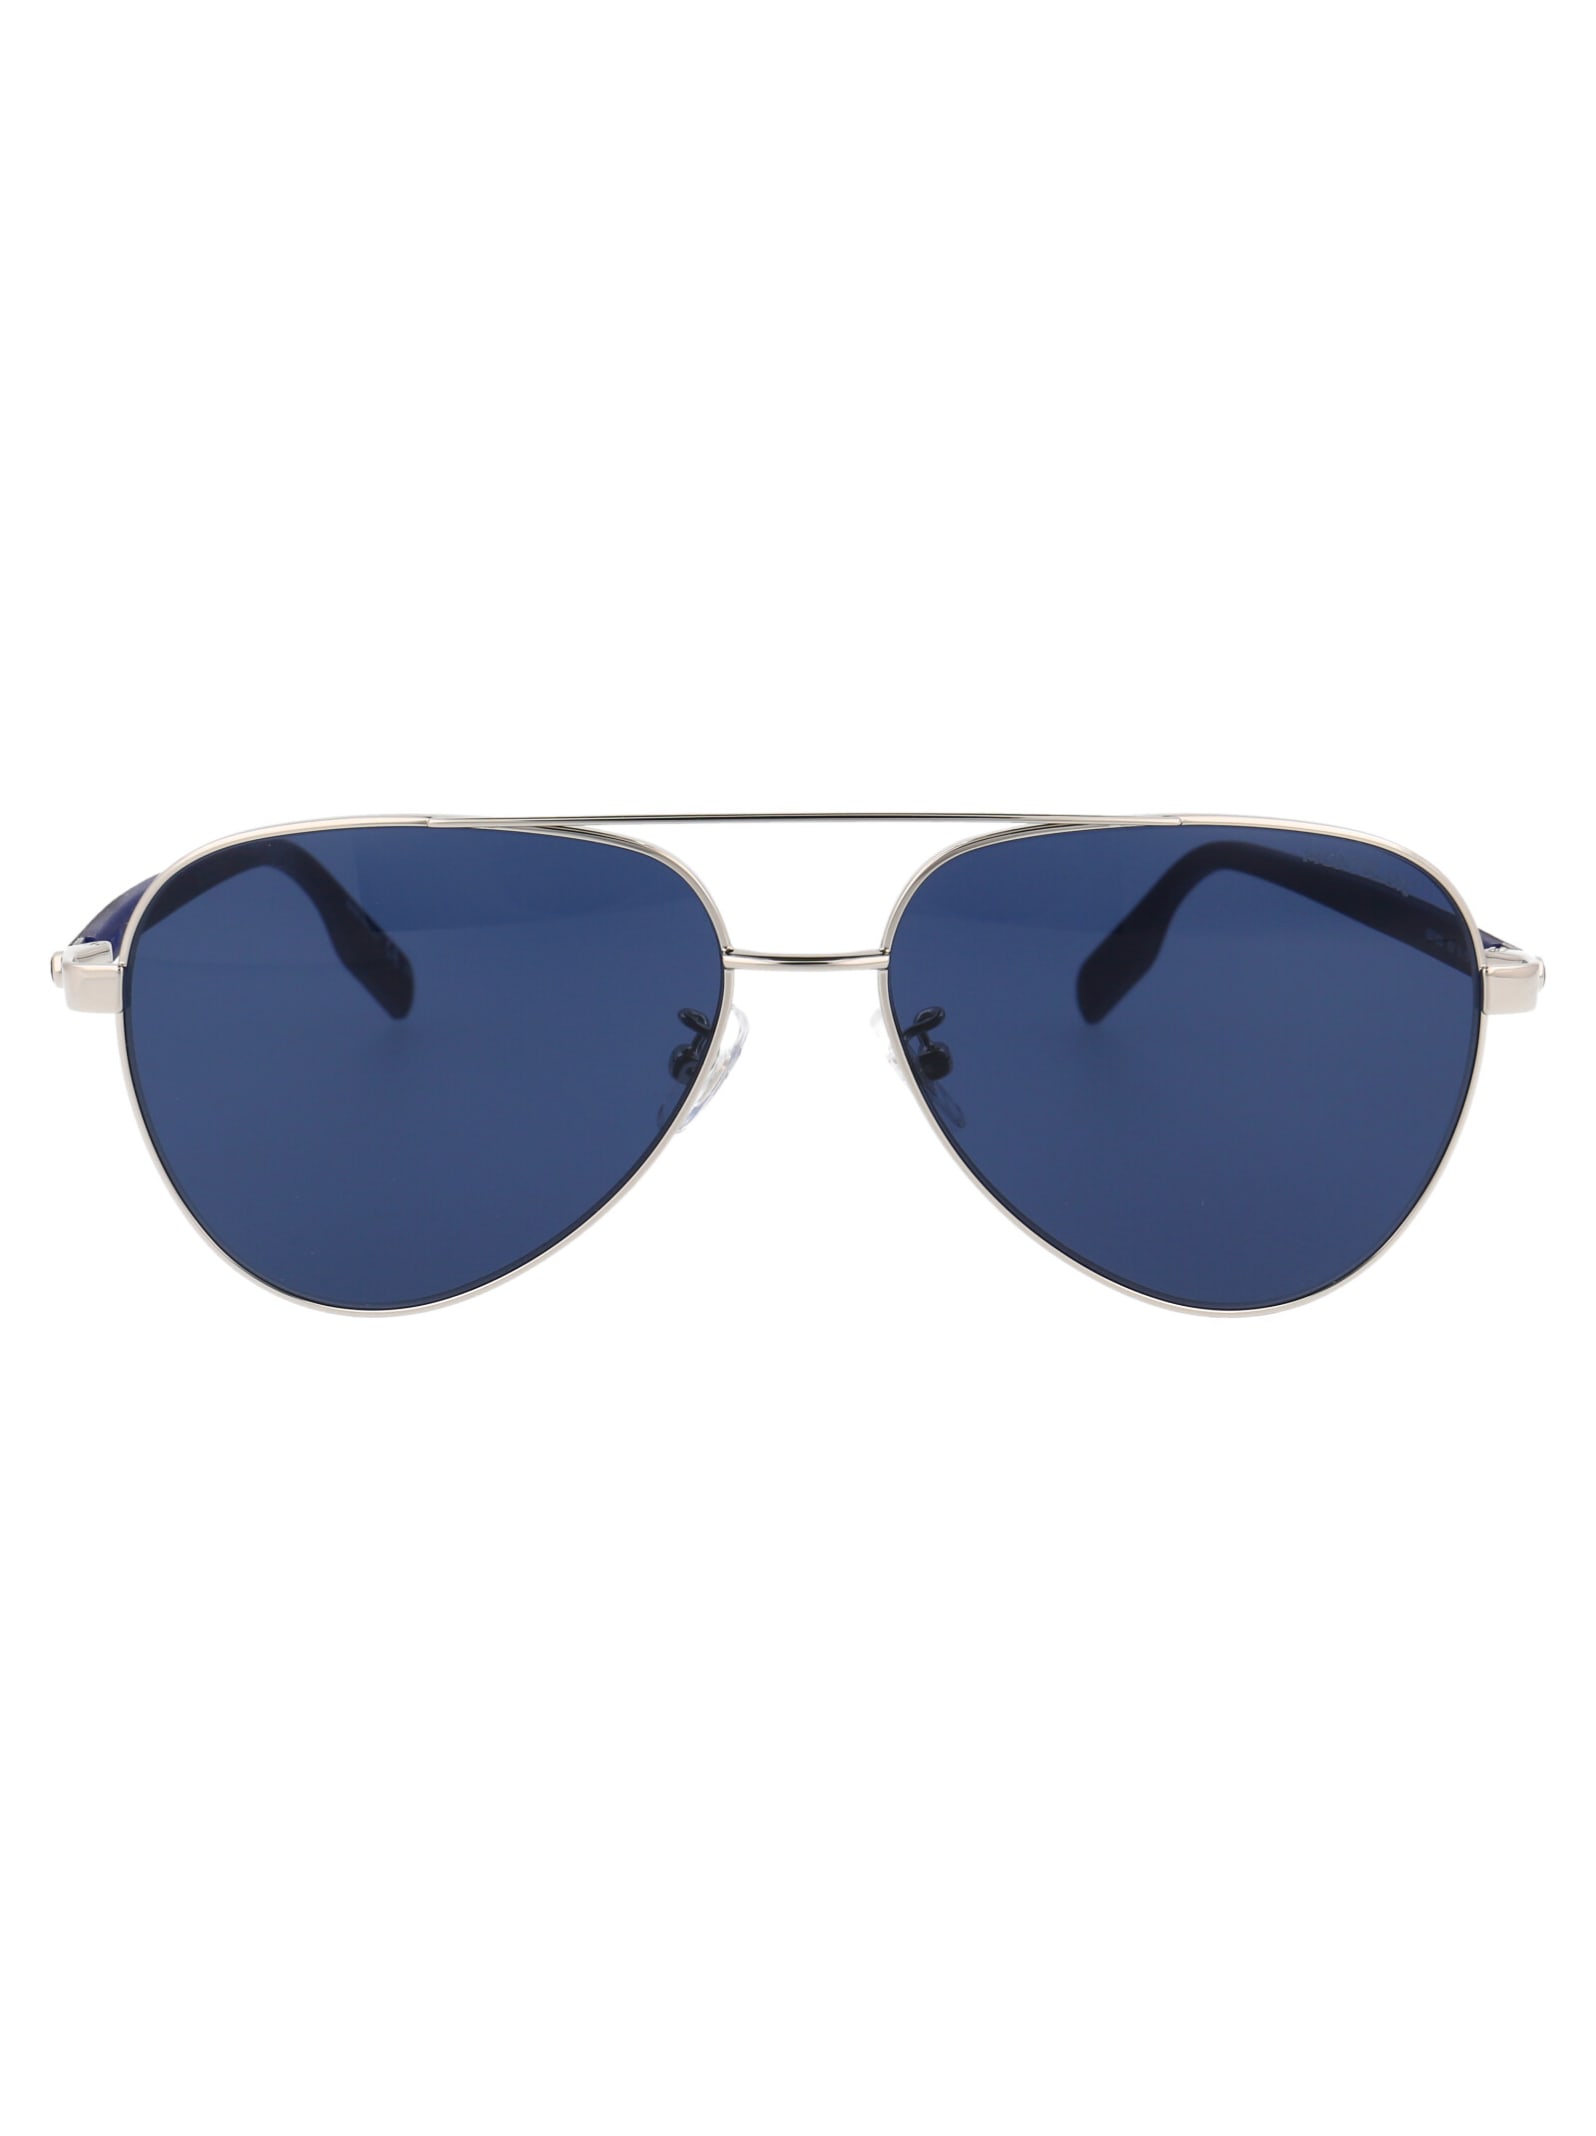 Montblanc Mb0182s Sunglasses